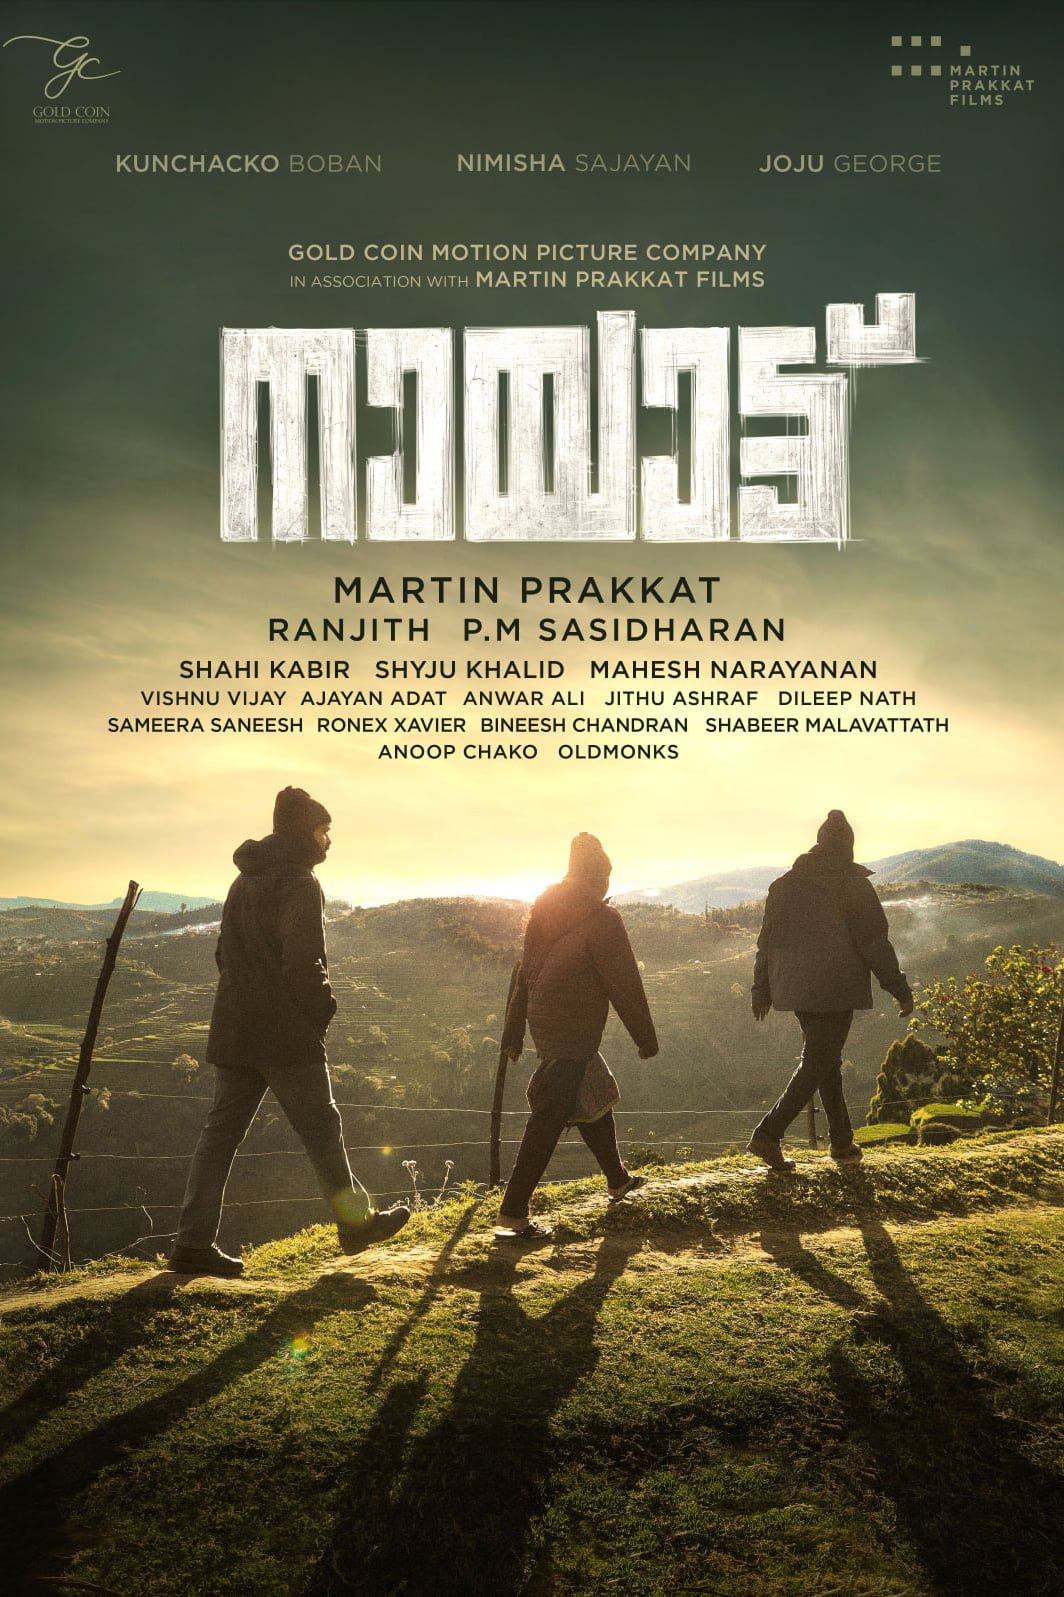 Poster for the movie "Nayattu"